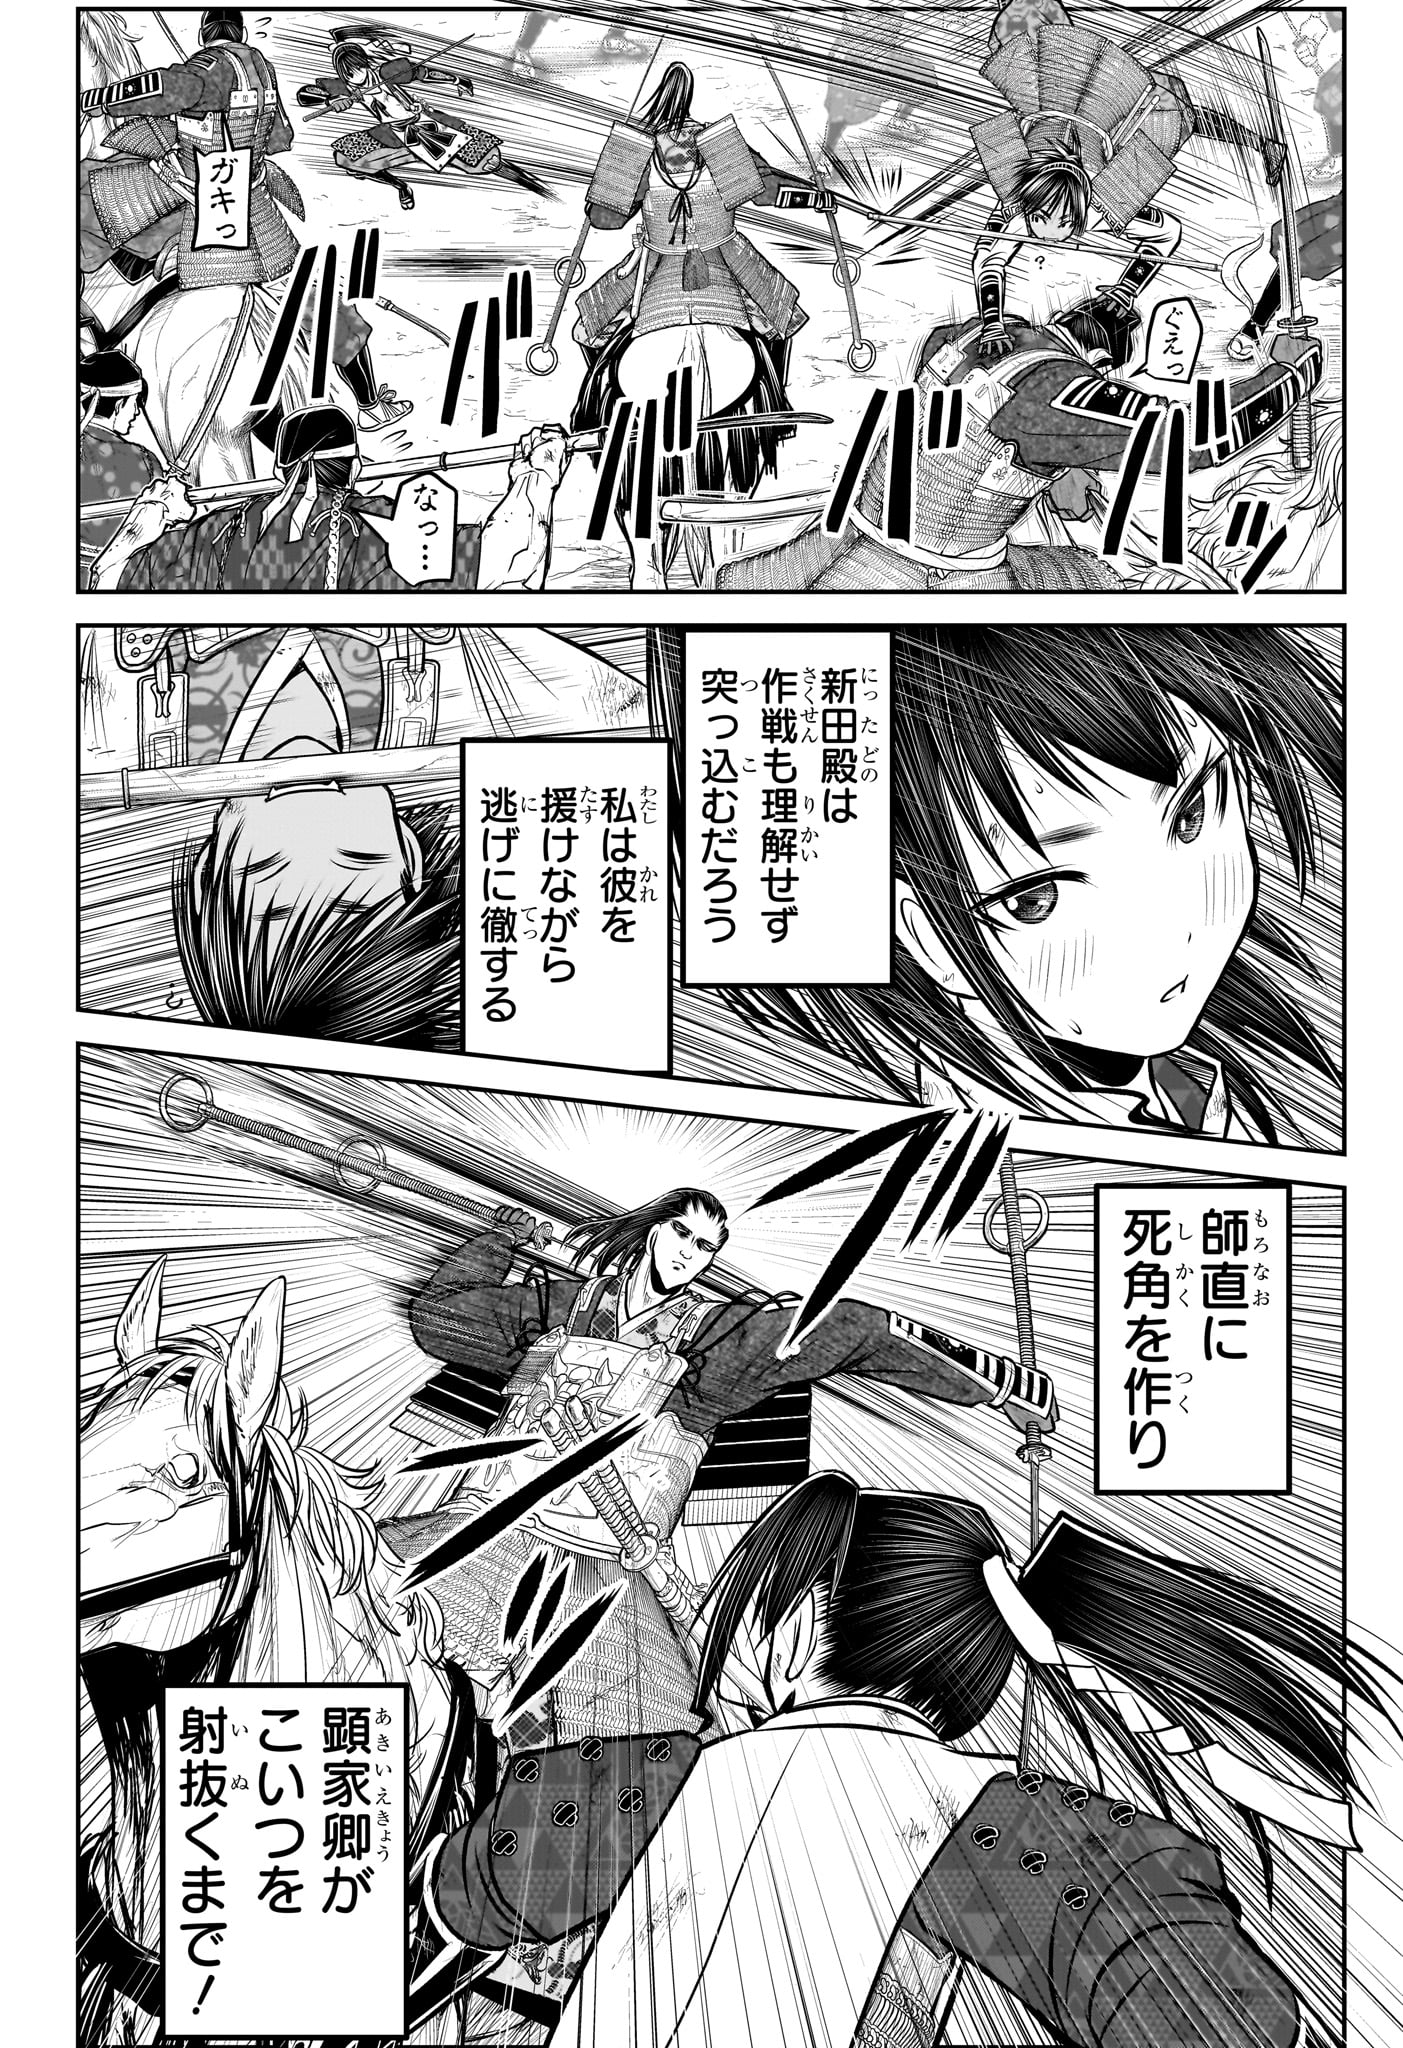 Nige Jouzu no Wakagimi - Chapter 163 - Page 17